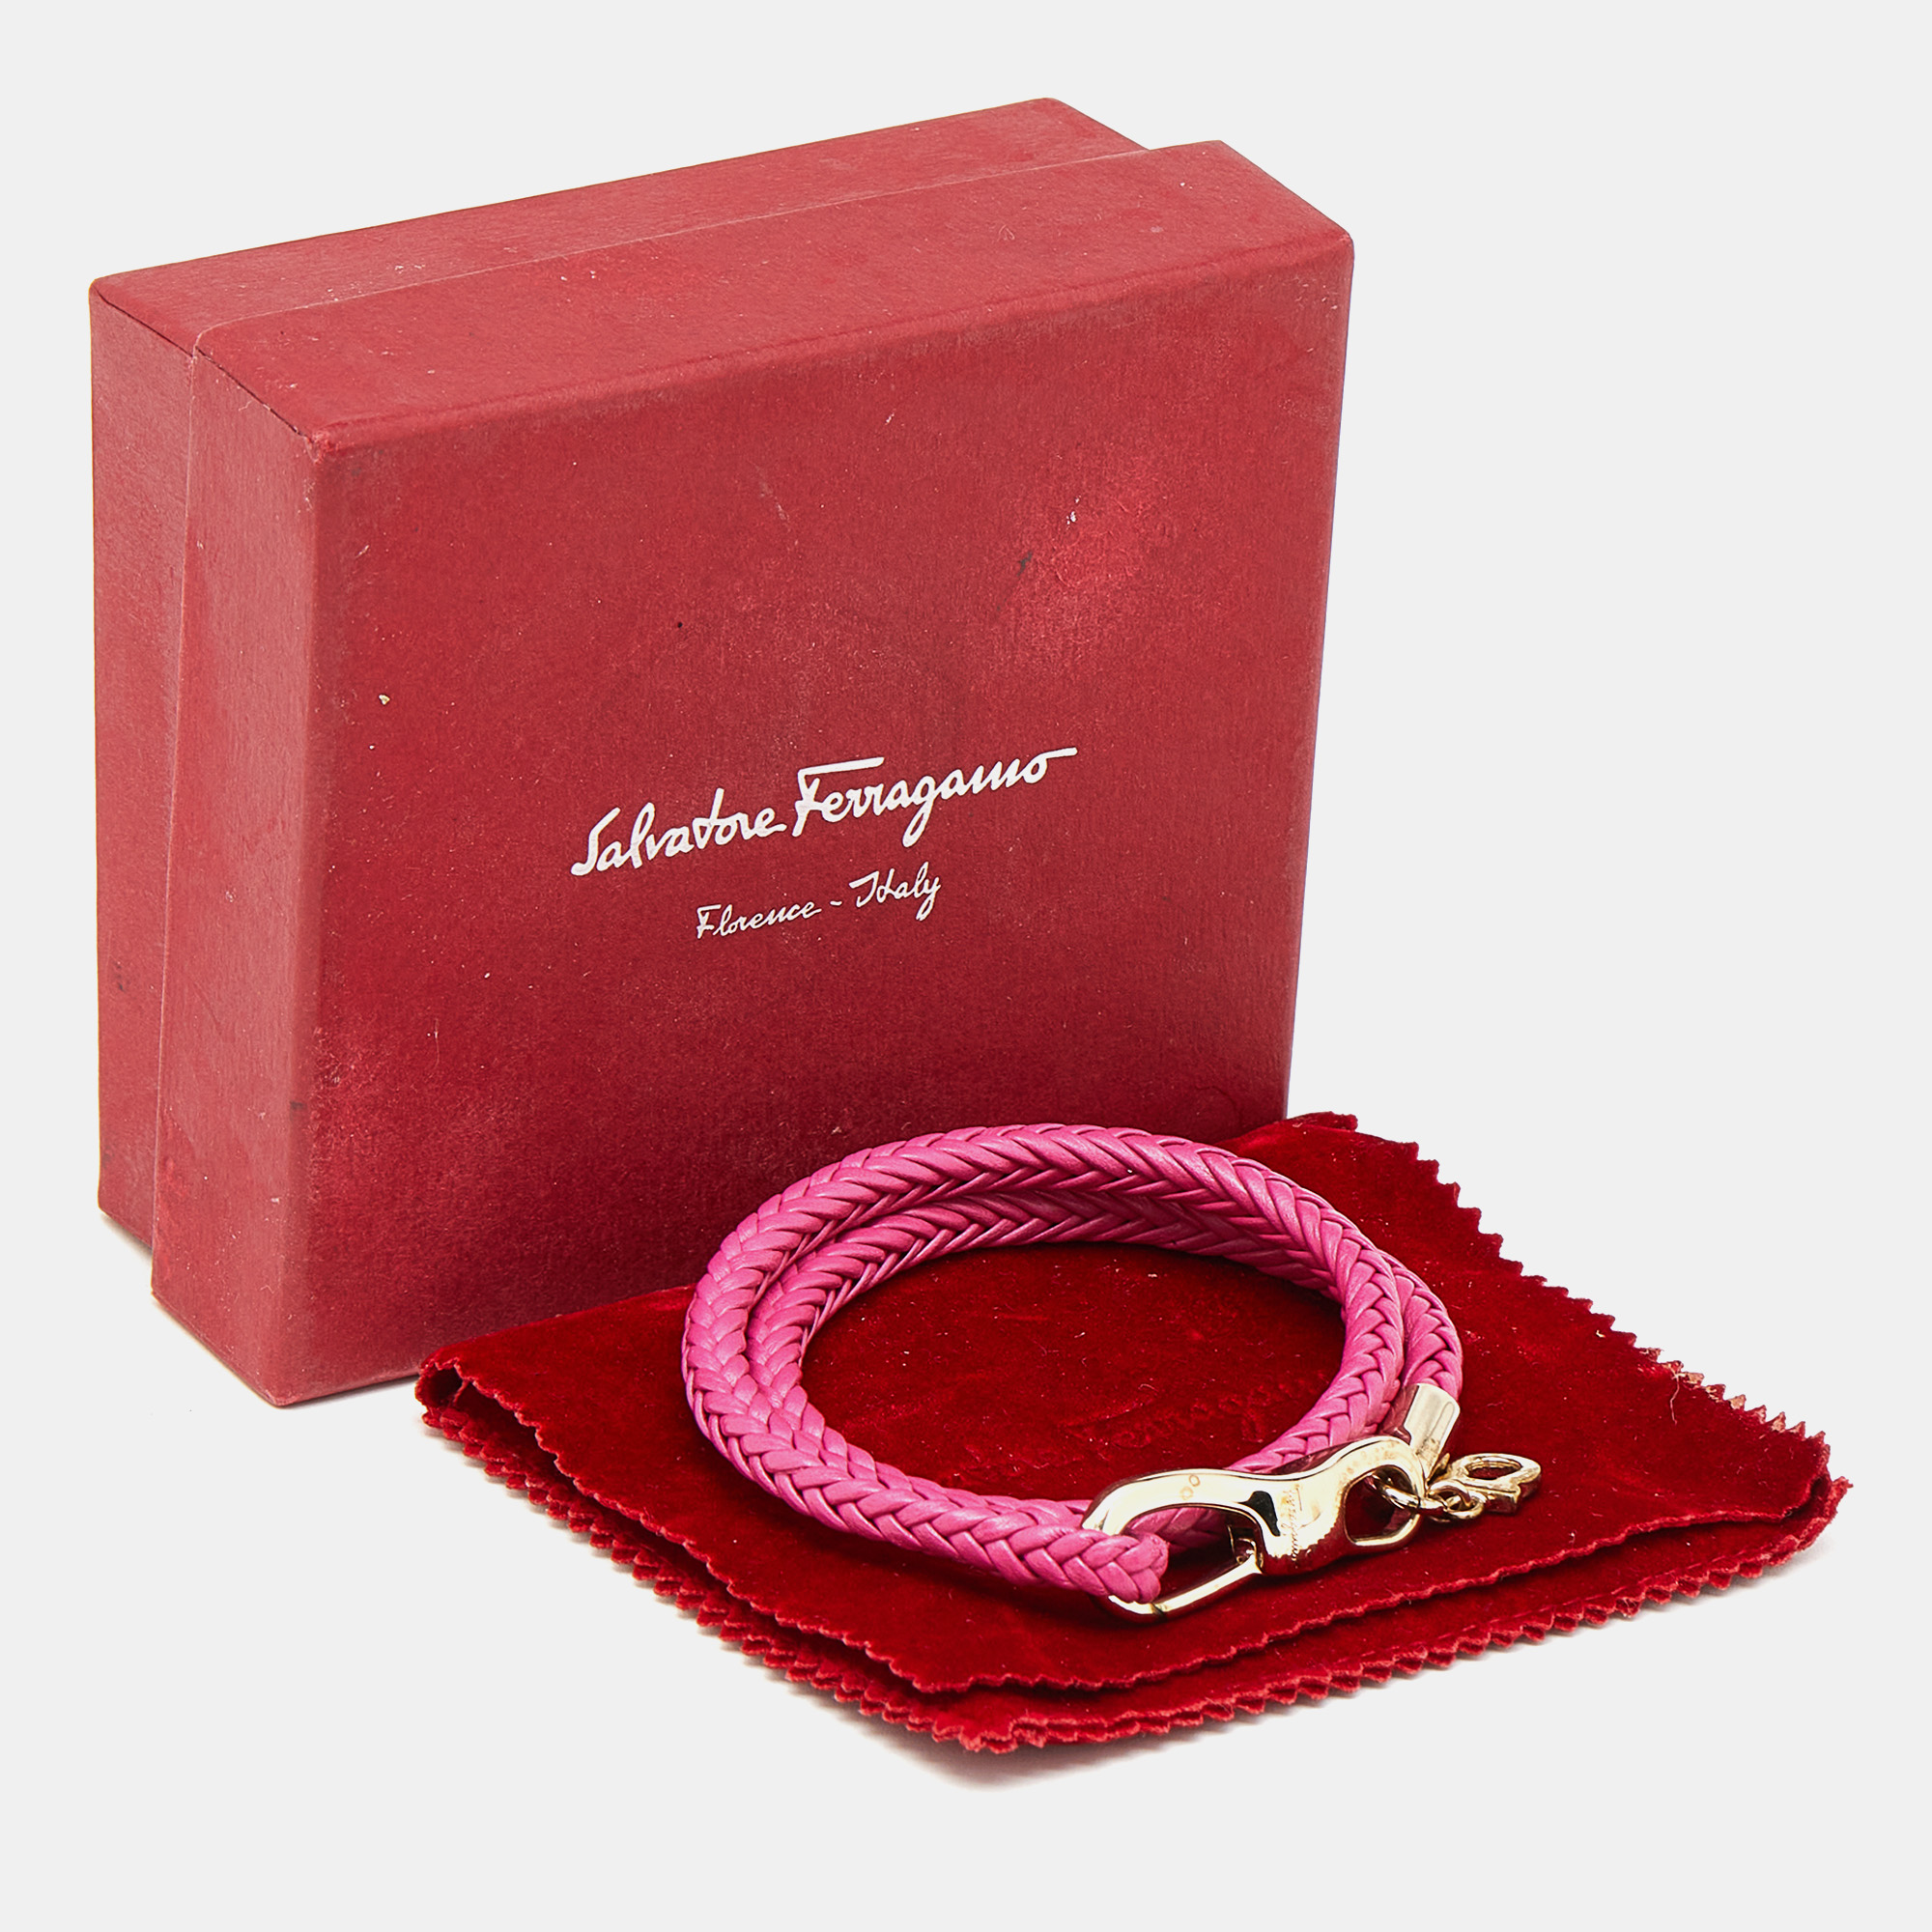 Salvatore Ferragamo Pink Braided Leather Gold Tone Wrap Bracelet